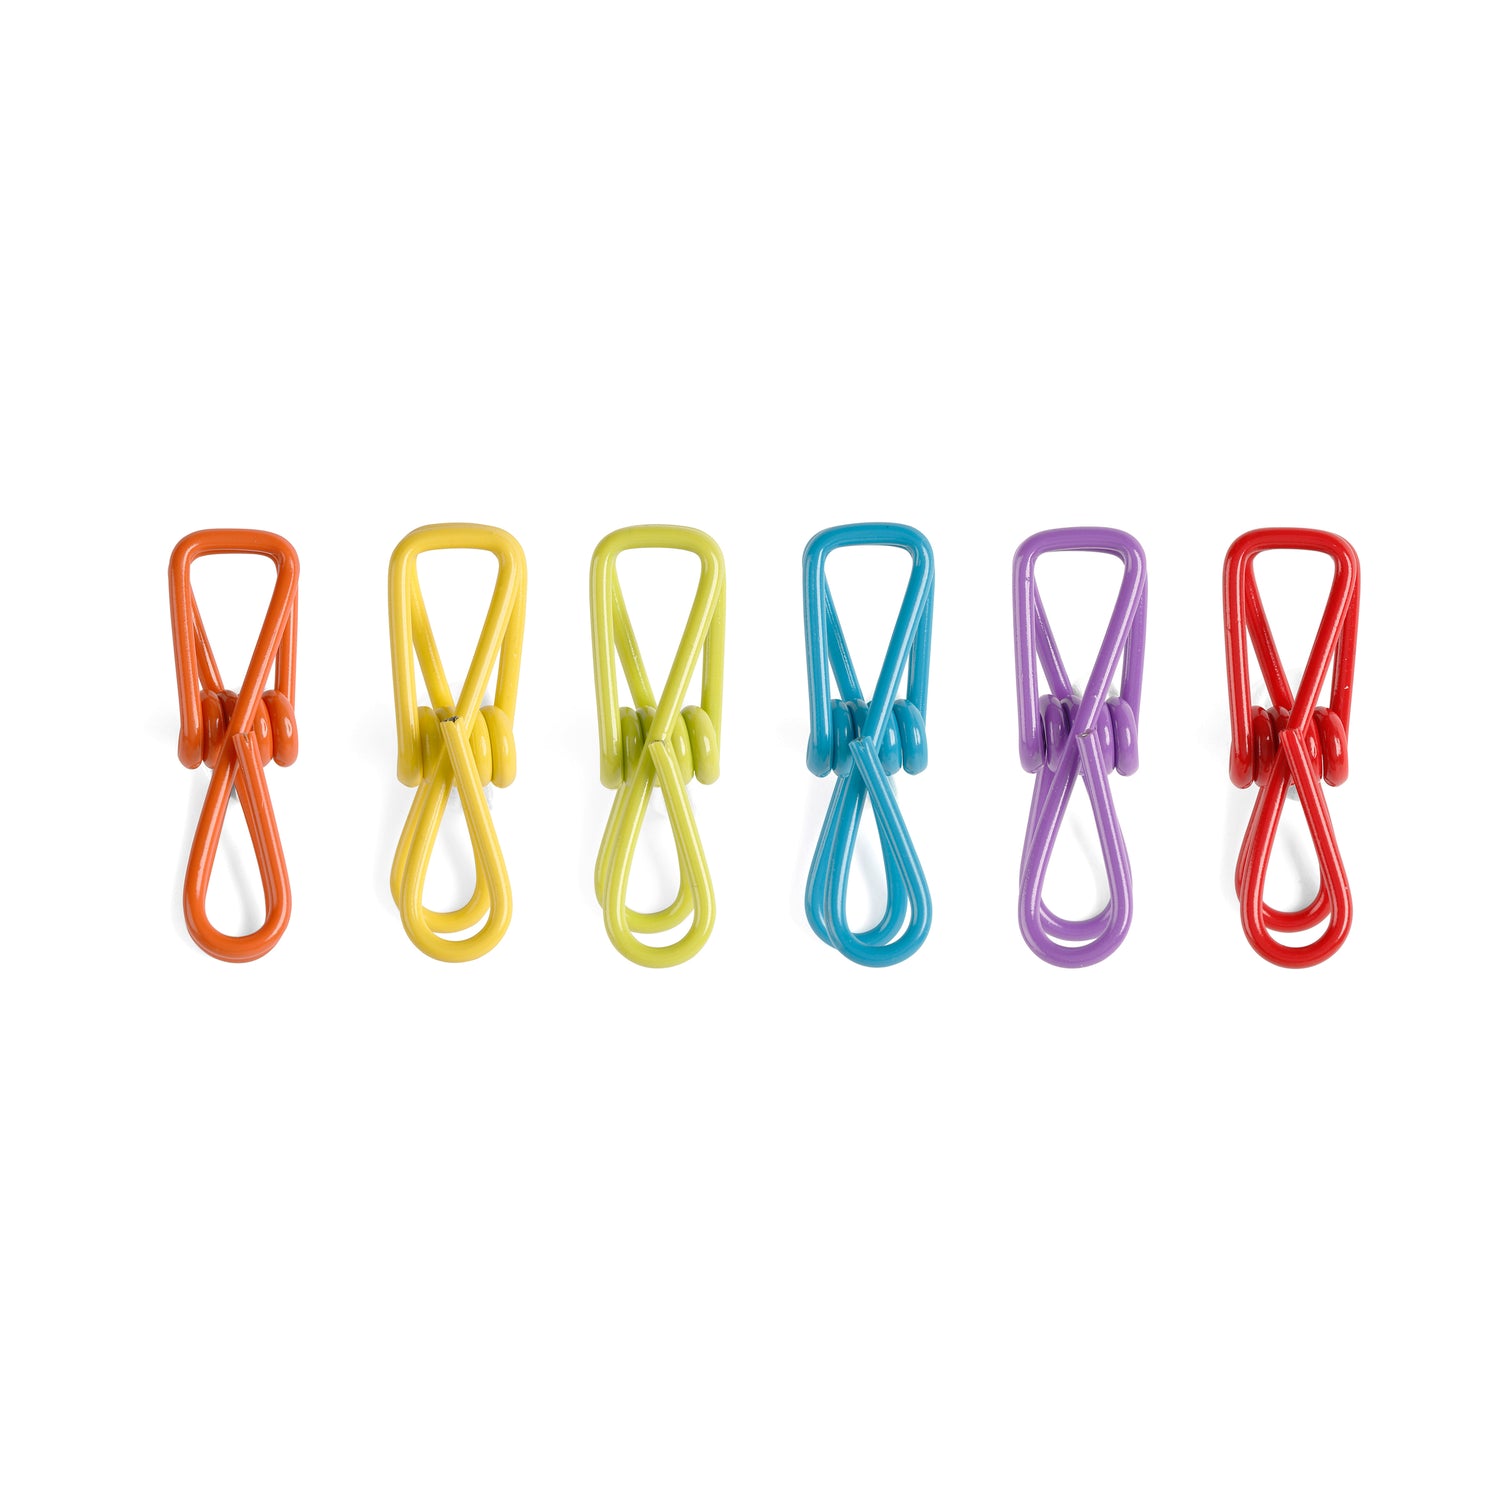 Kikkerland Design Rainbow Bag Clips